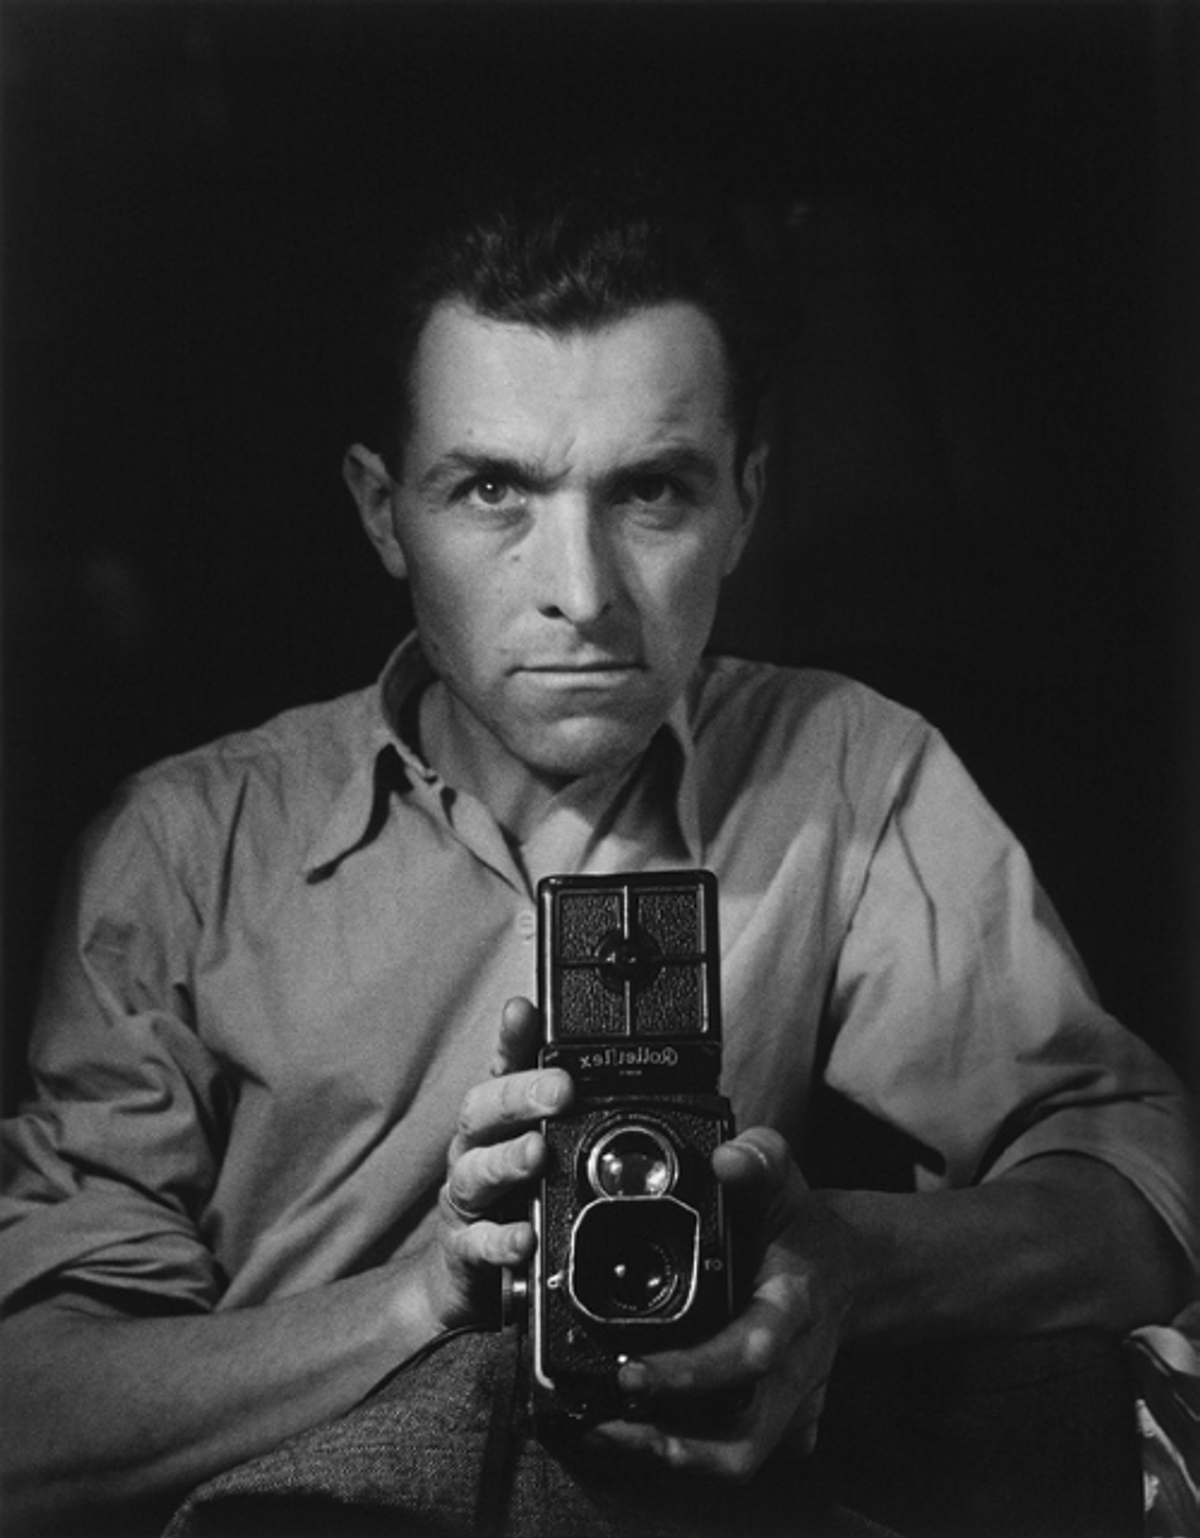 Robert Doisneau, Autoportrait au Rolleiflex, 1947, photographie. © Atelier Robert Doisneau